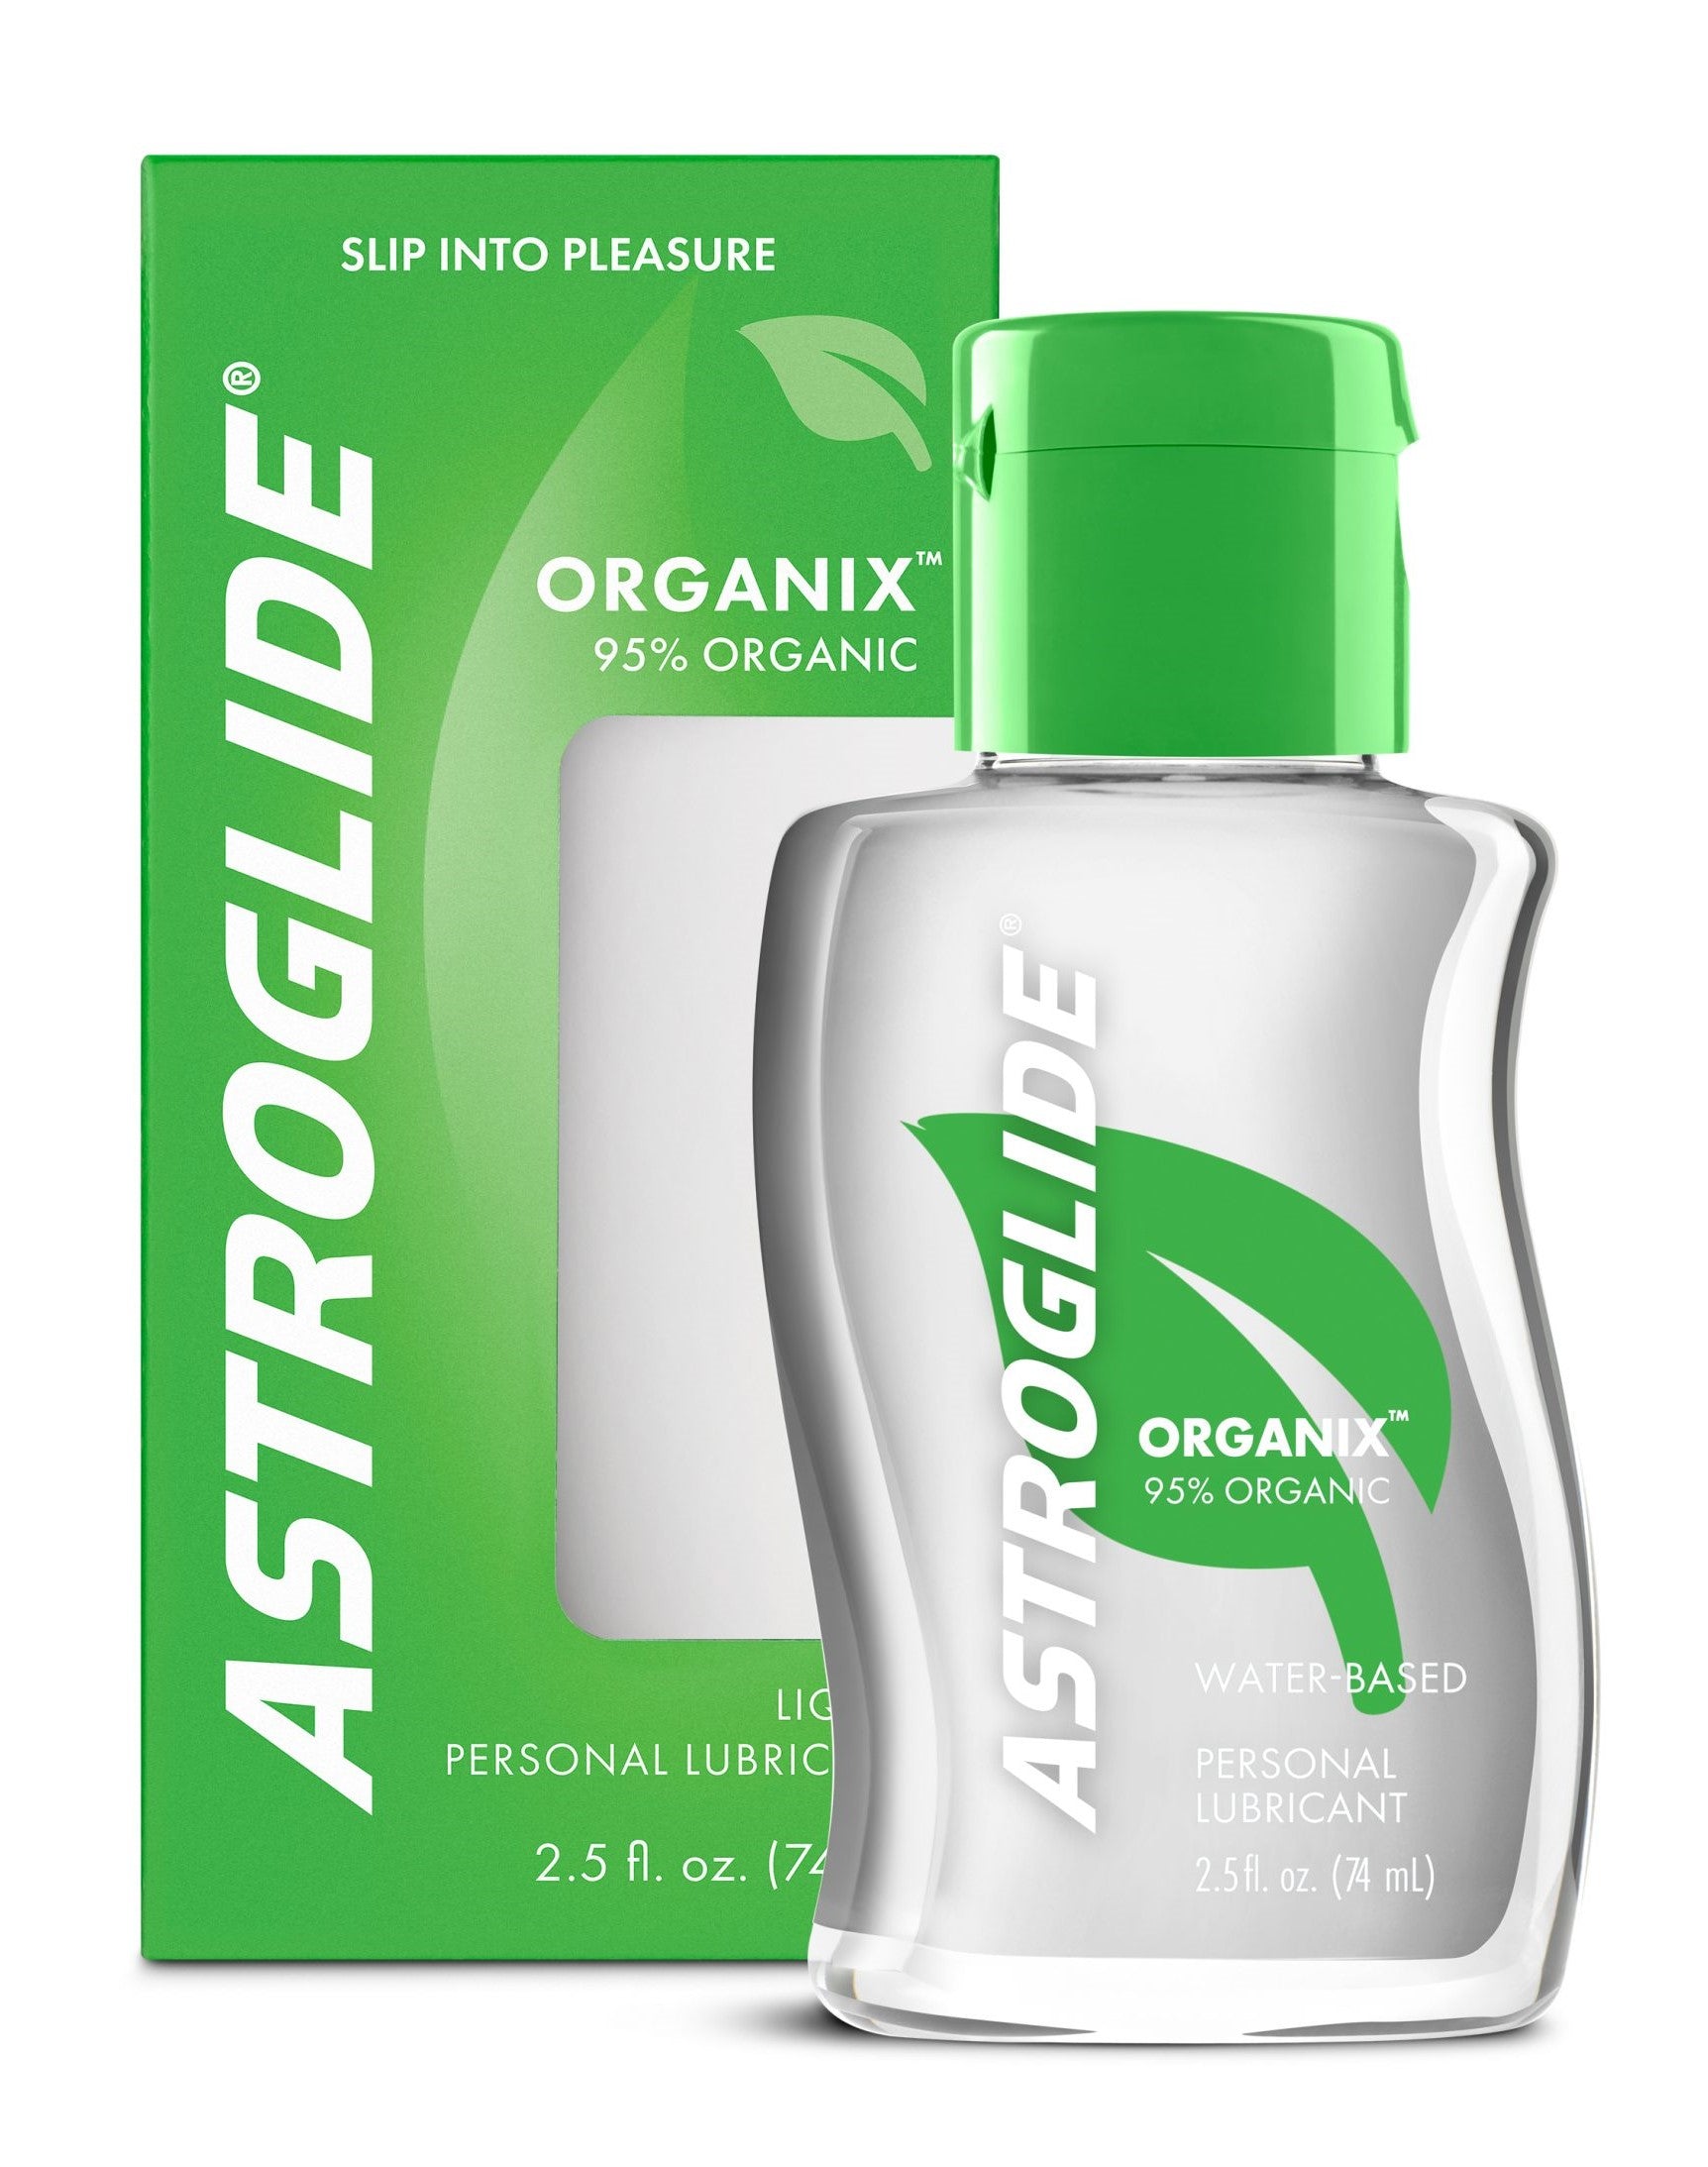 Astroglide Organix Liquid Personal Lubricant 74ml